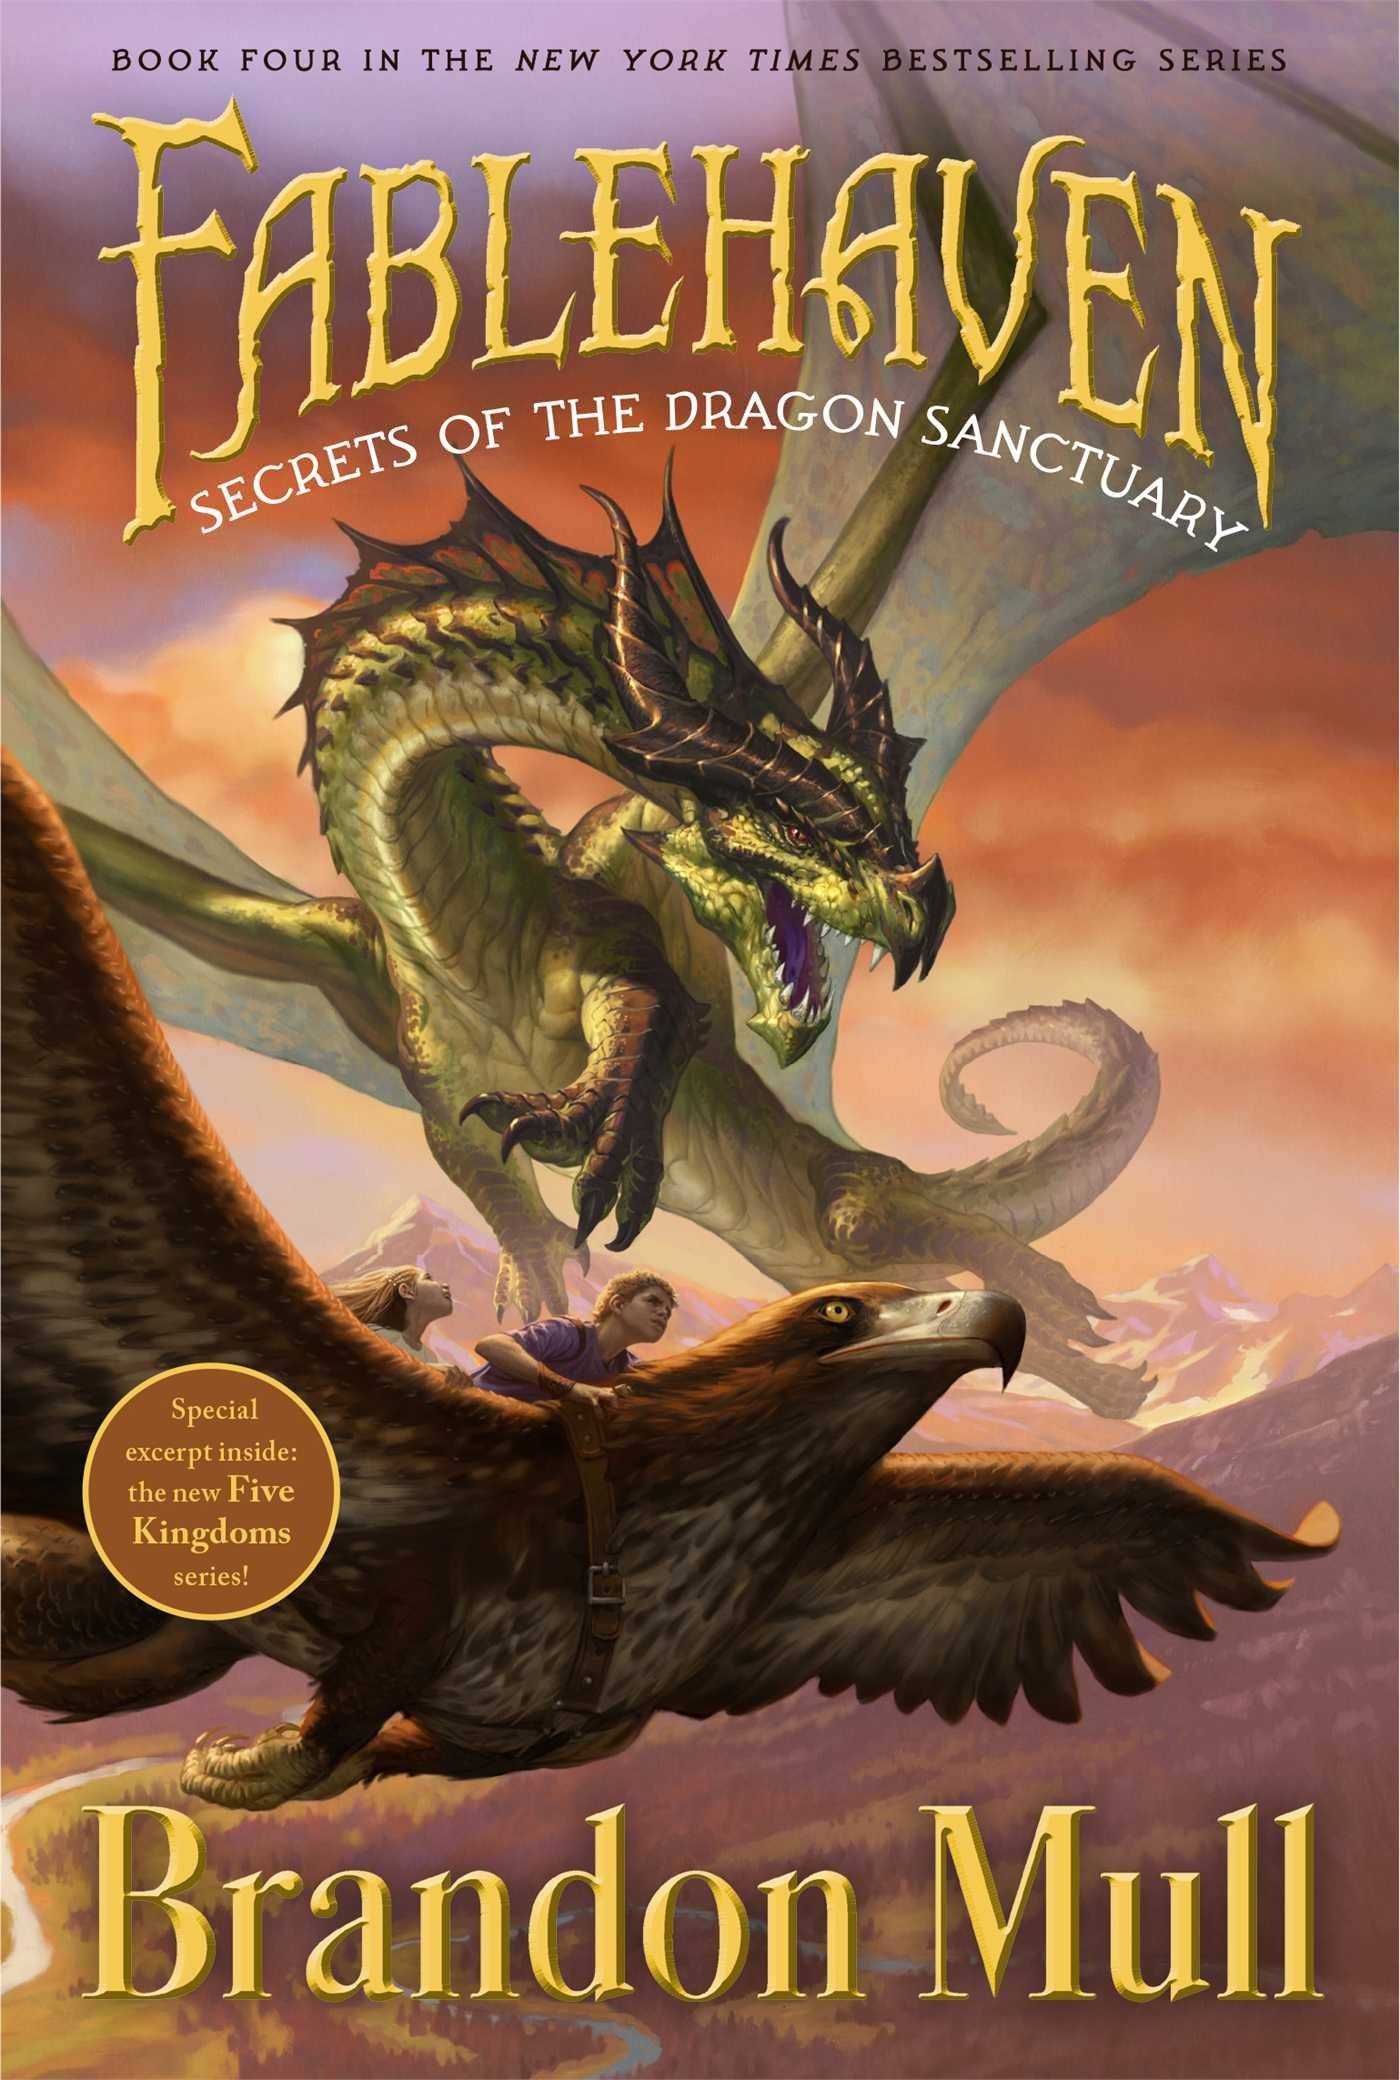 IMG : FableHaven Secrets of the Dragon Sanctuary #4